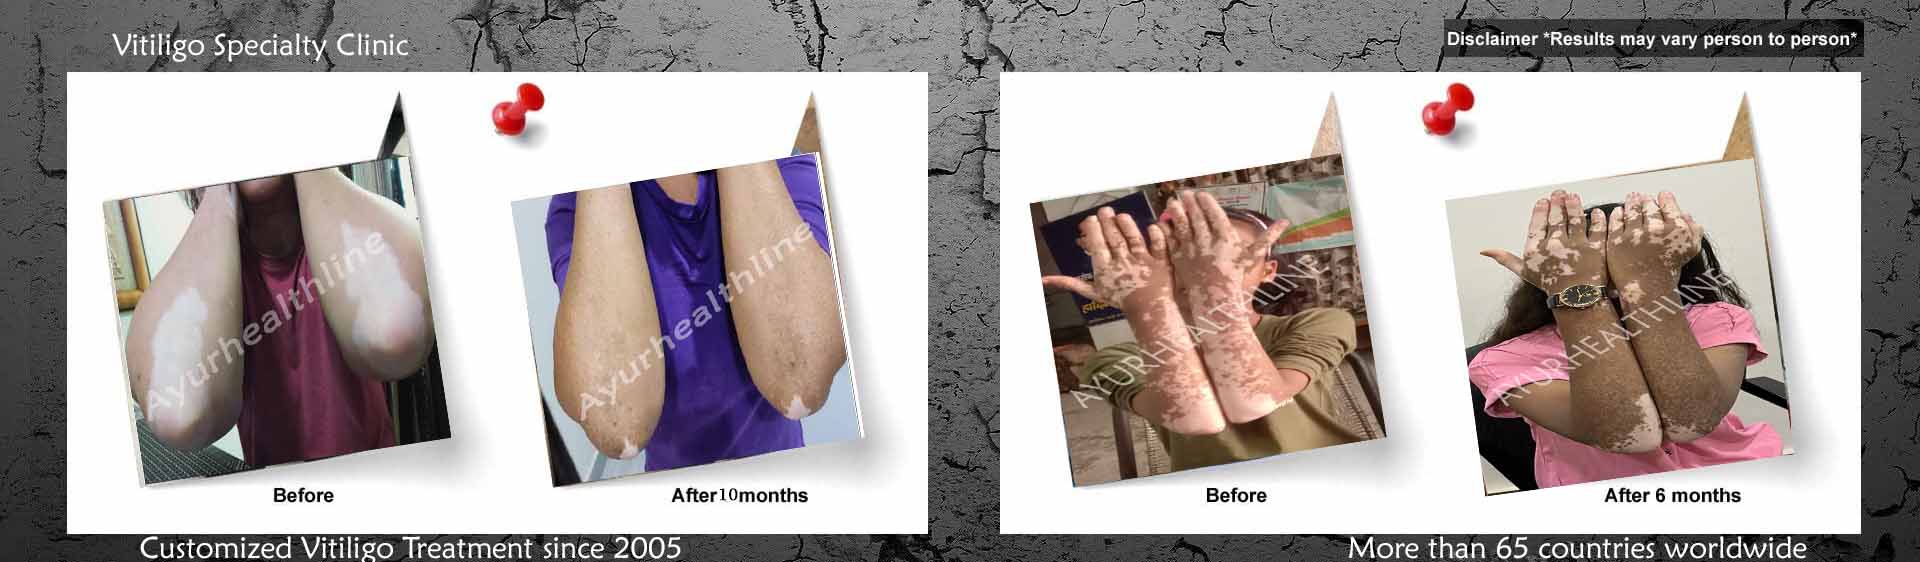 Anti vitiligo kit treatment for vitiligo in Ayurveda